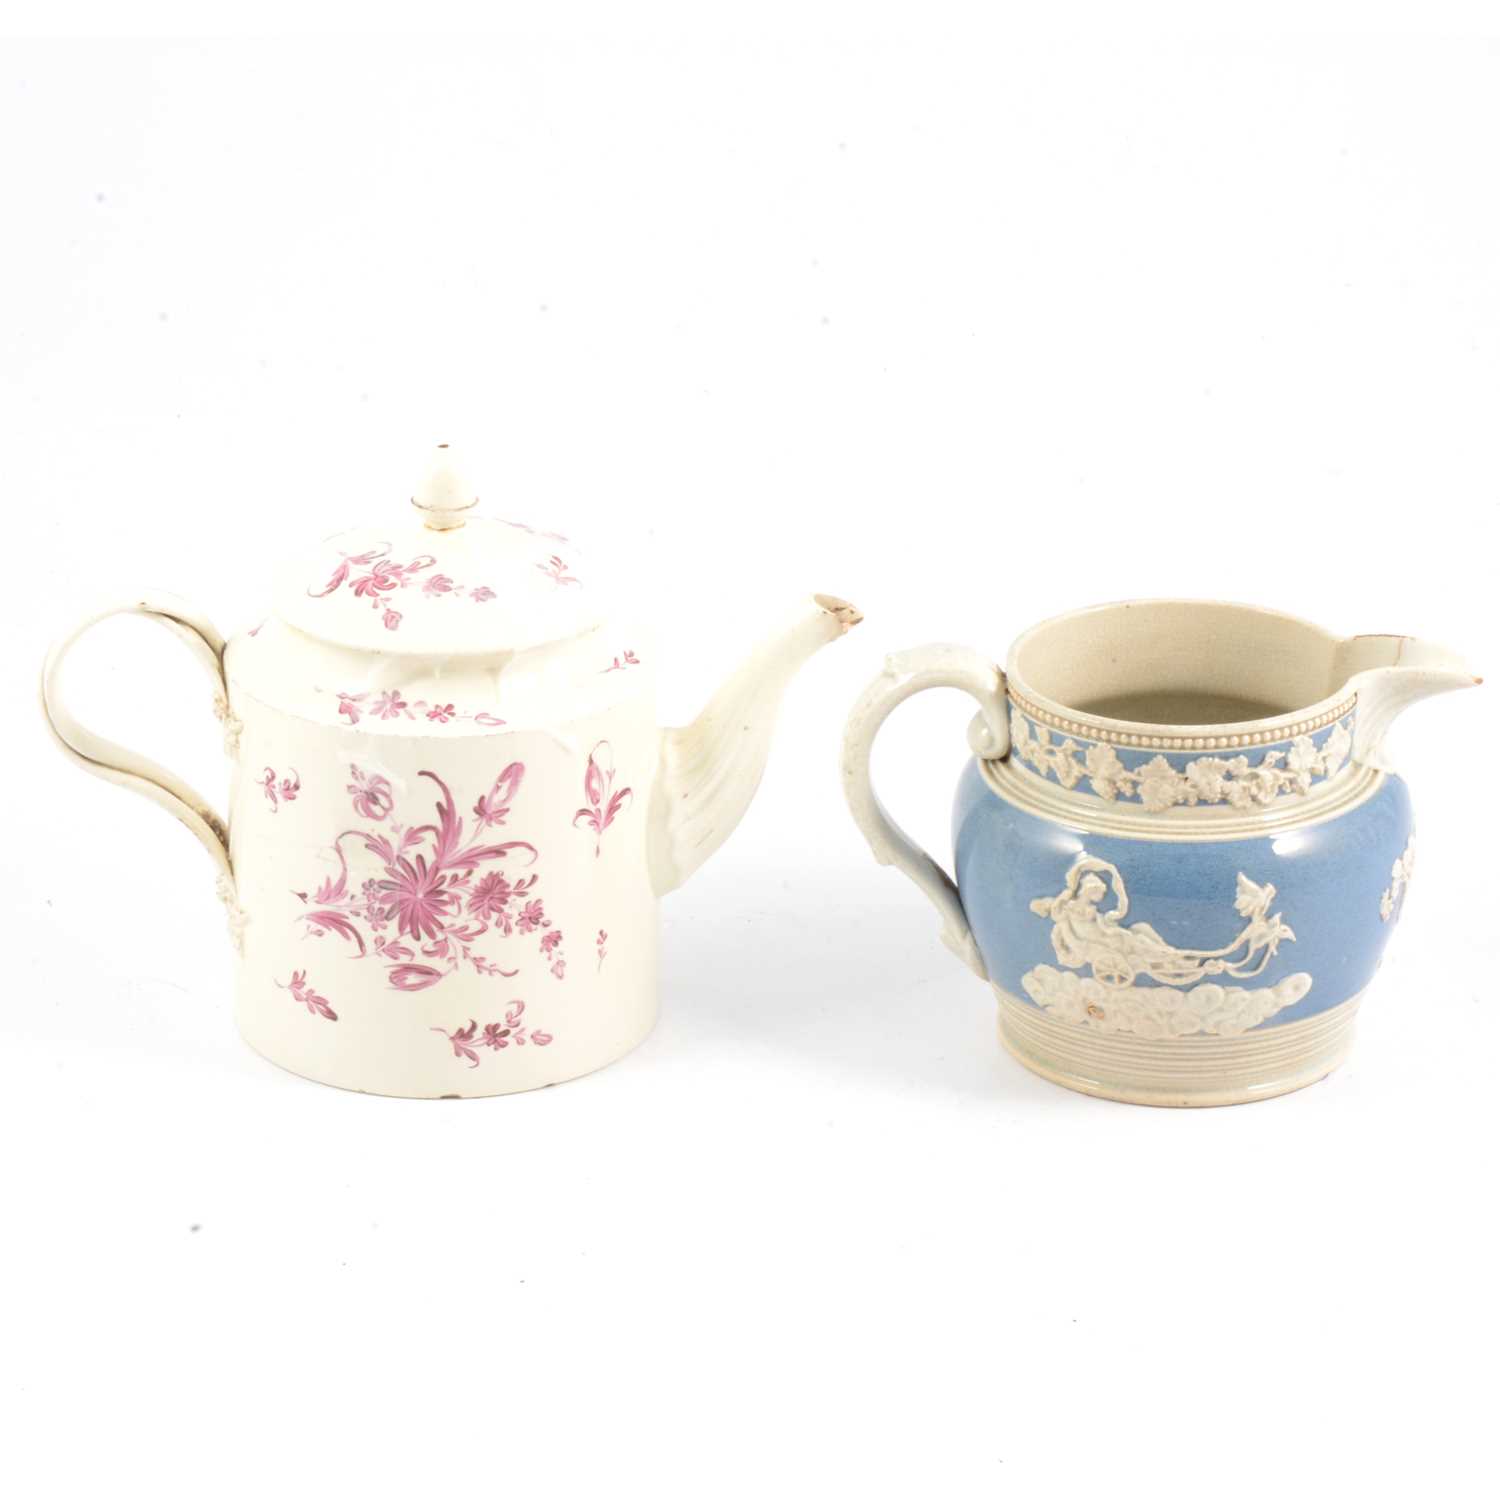 Lot 3 - Leeds creamware teapot and Castleford type blue glaze jug.